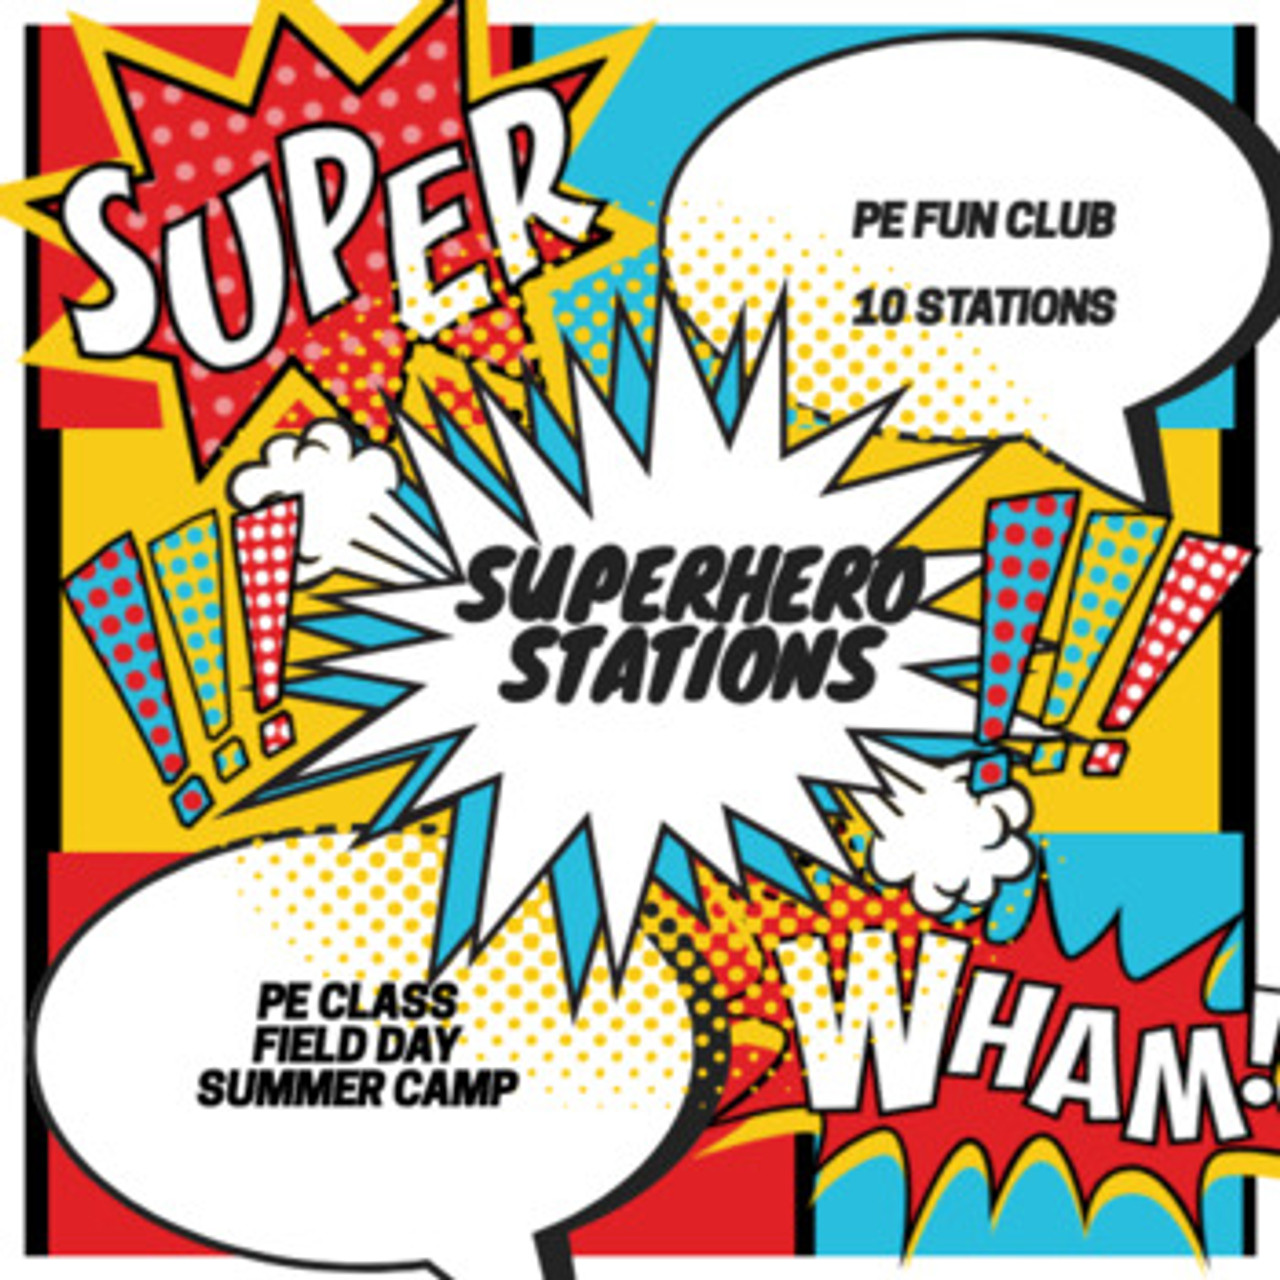 Superhero Stations - PE Class, Field Day, Summer Camp